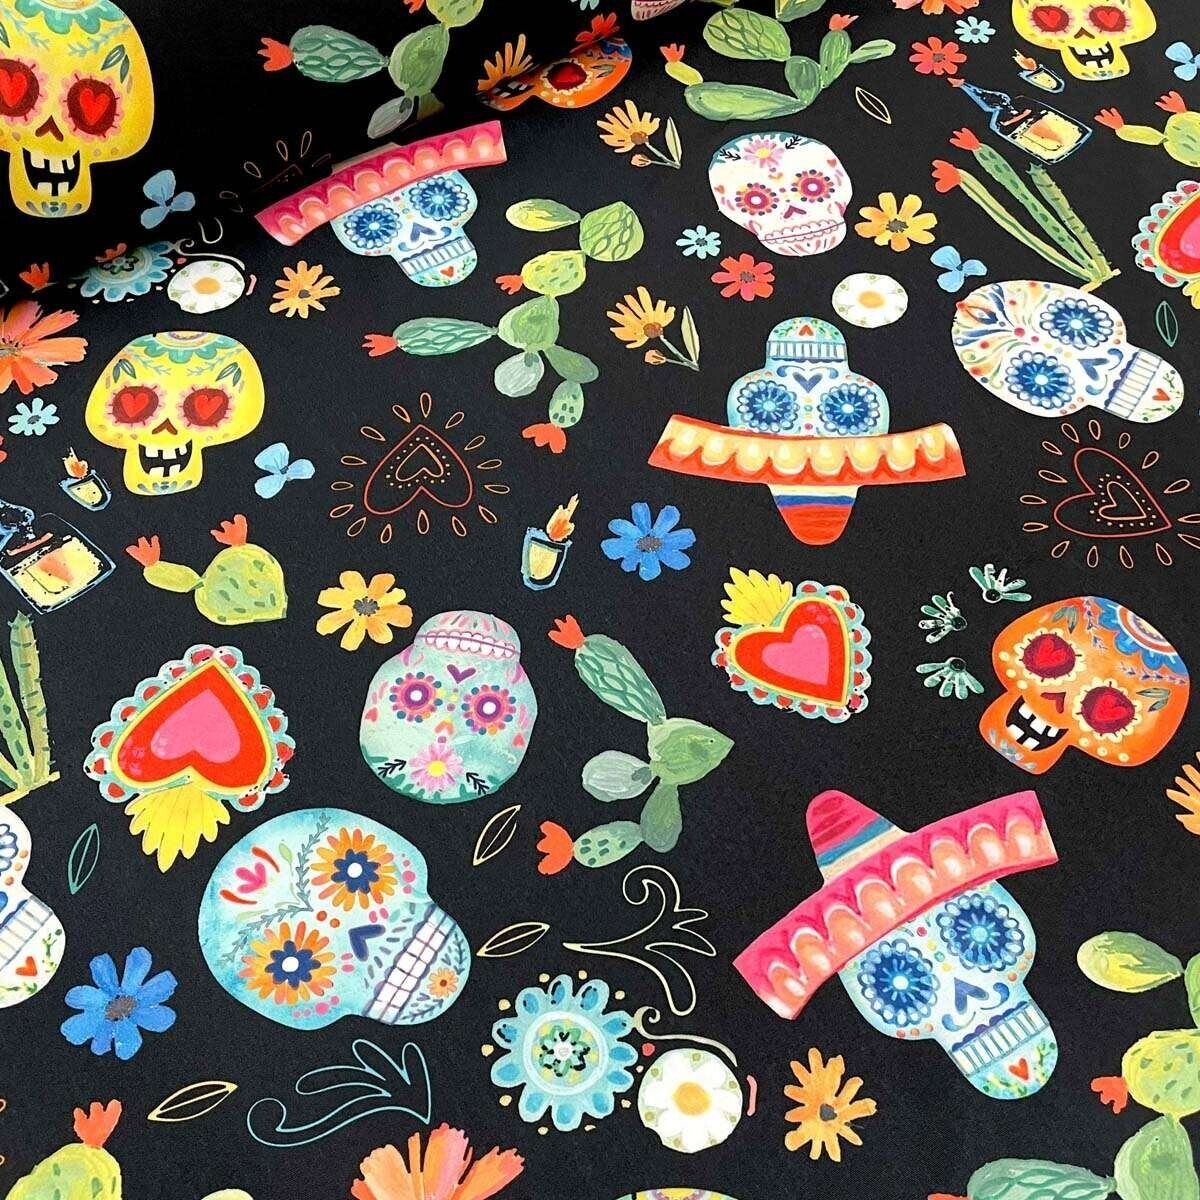 Osadia Handmade Black Mexican Heart Tablecloth - Yellow trim